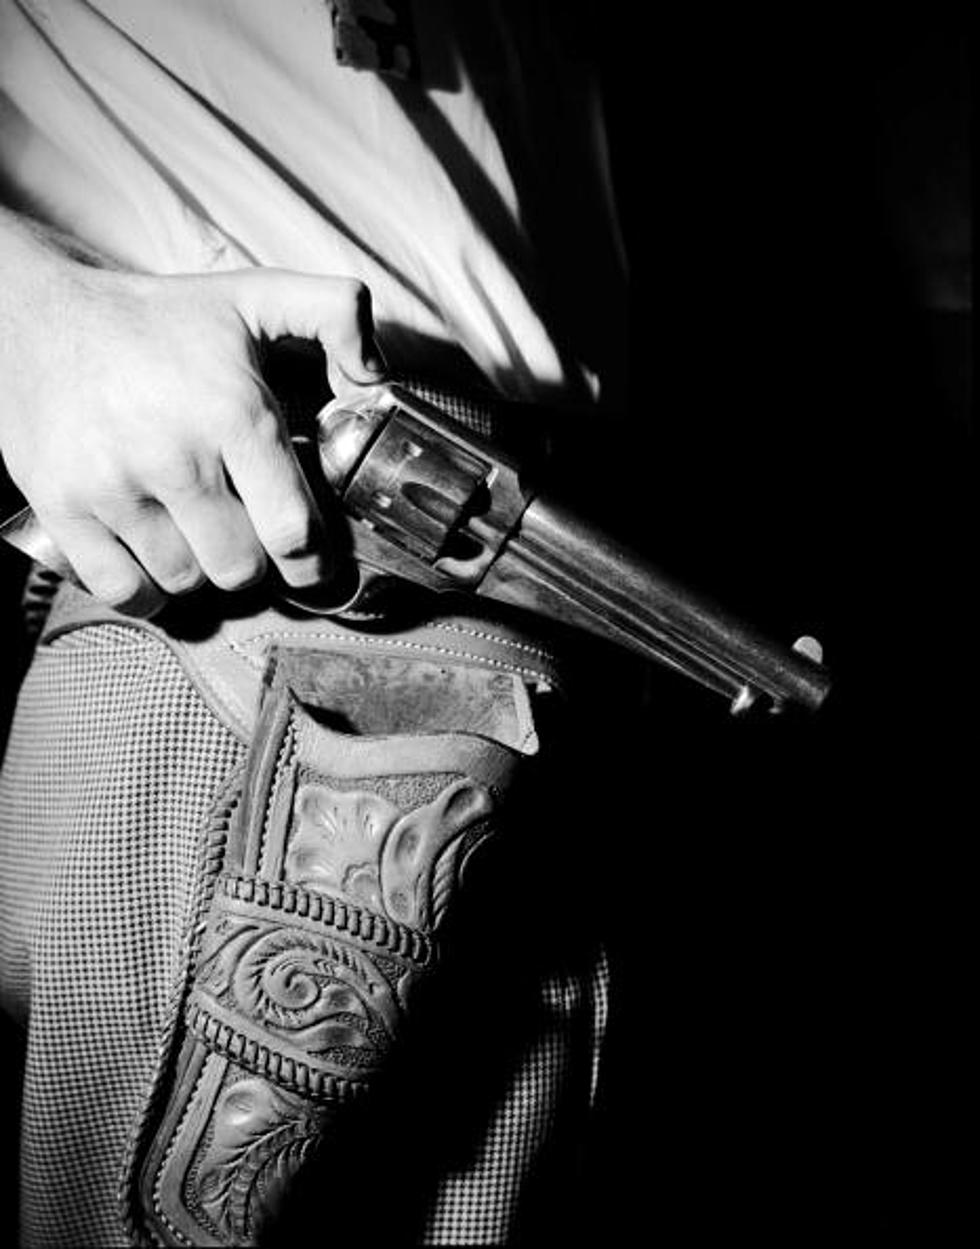 Council Brandishes Gun Restriction [AUDIO]